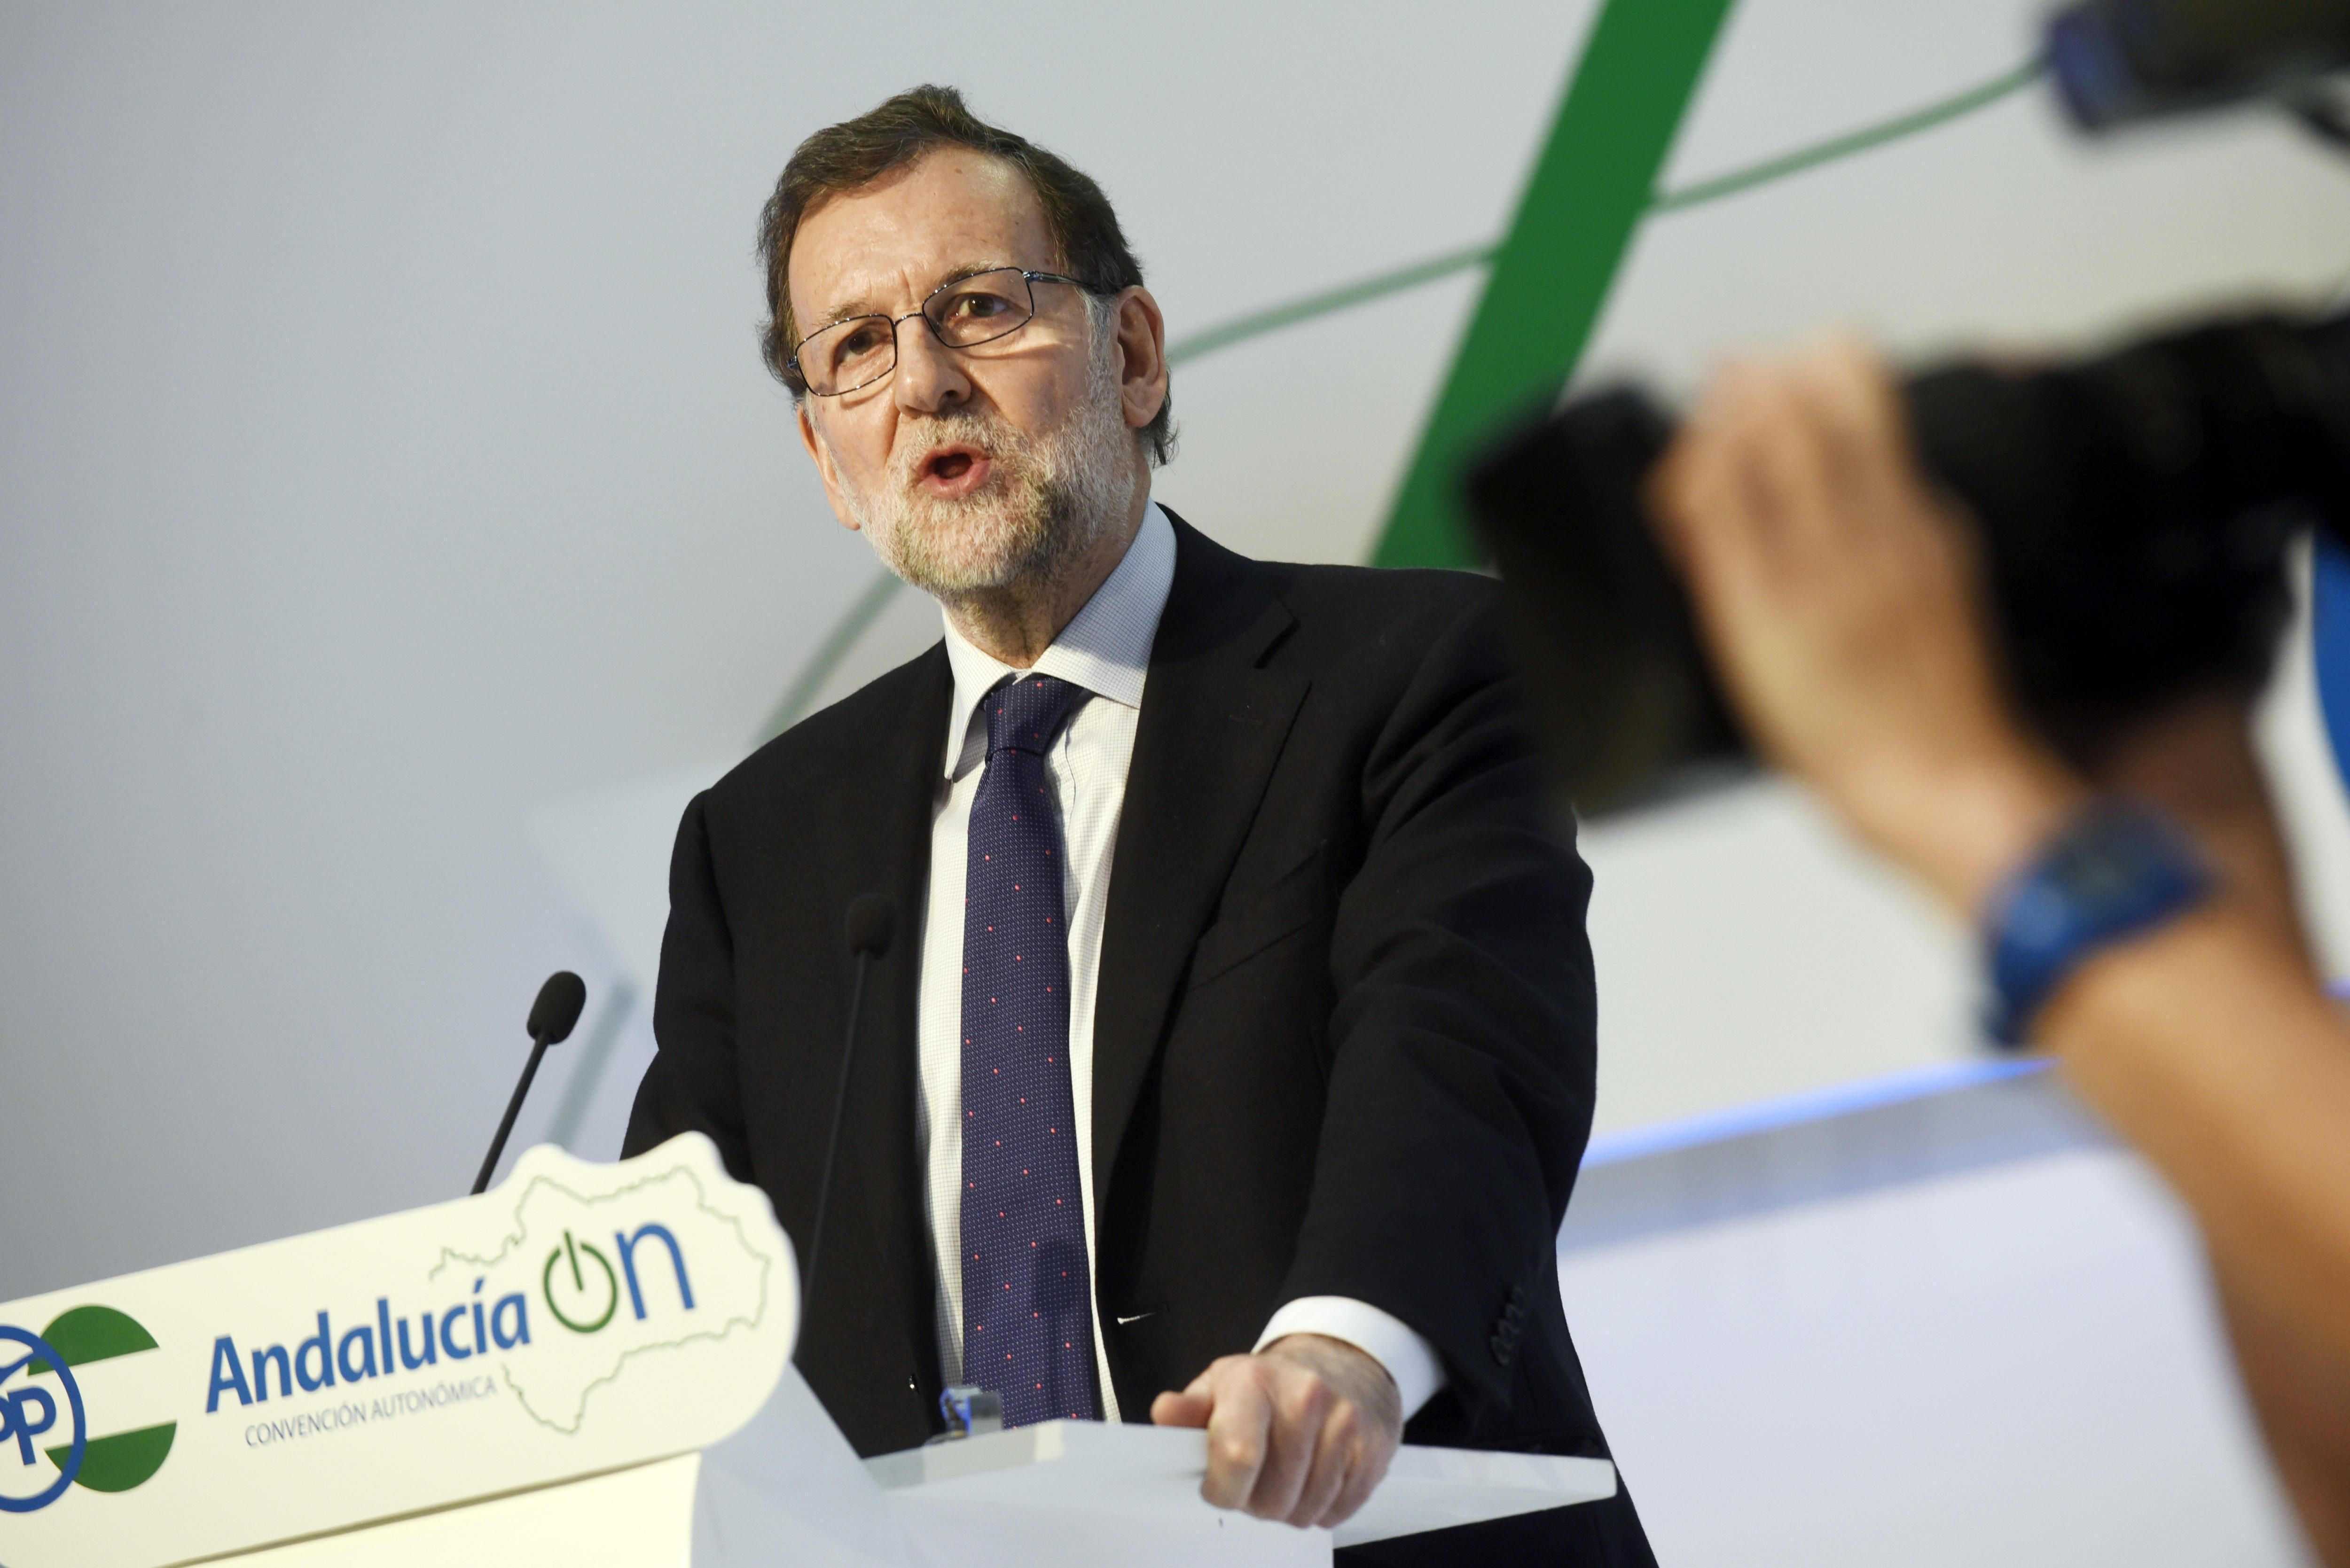 Rajoy adverteix Puigdemont sobre seguir "abraçat a la radicalitat"